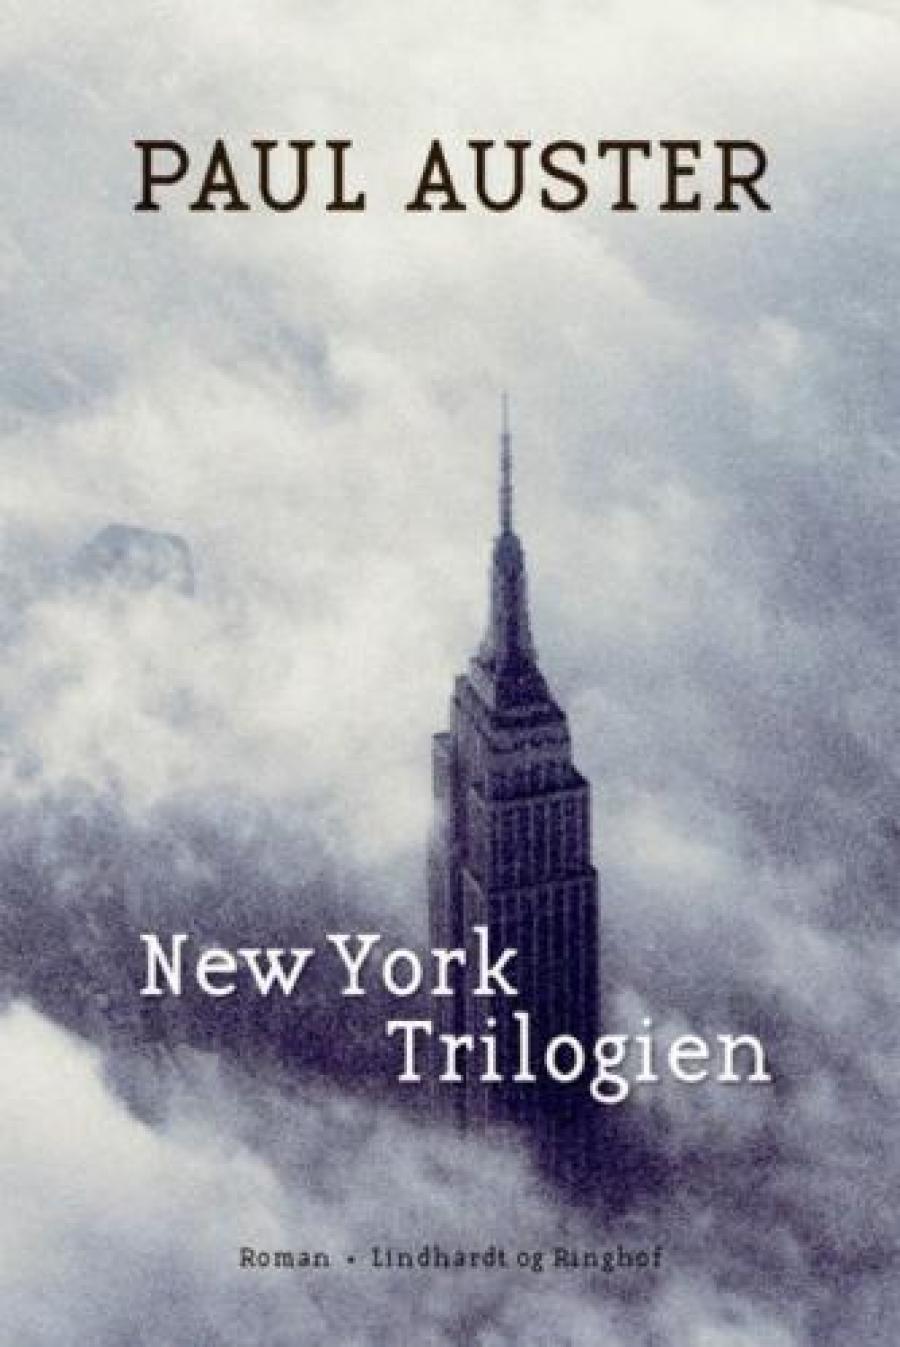 New York Trilogien